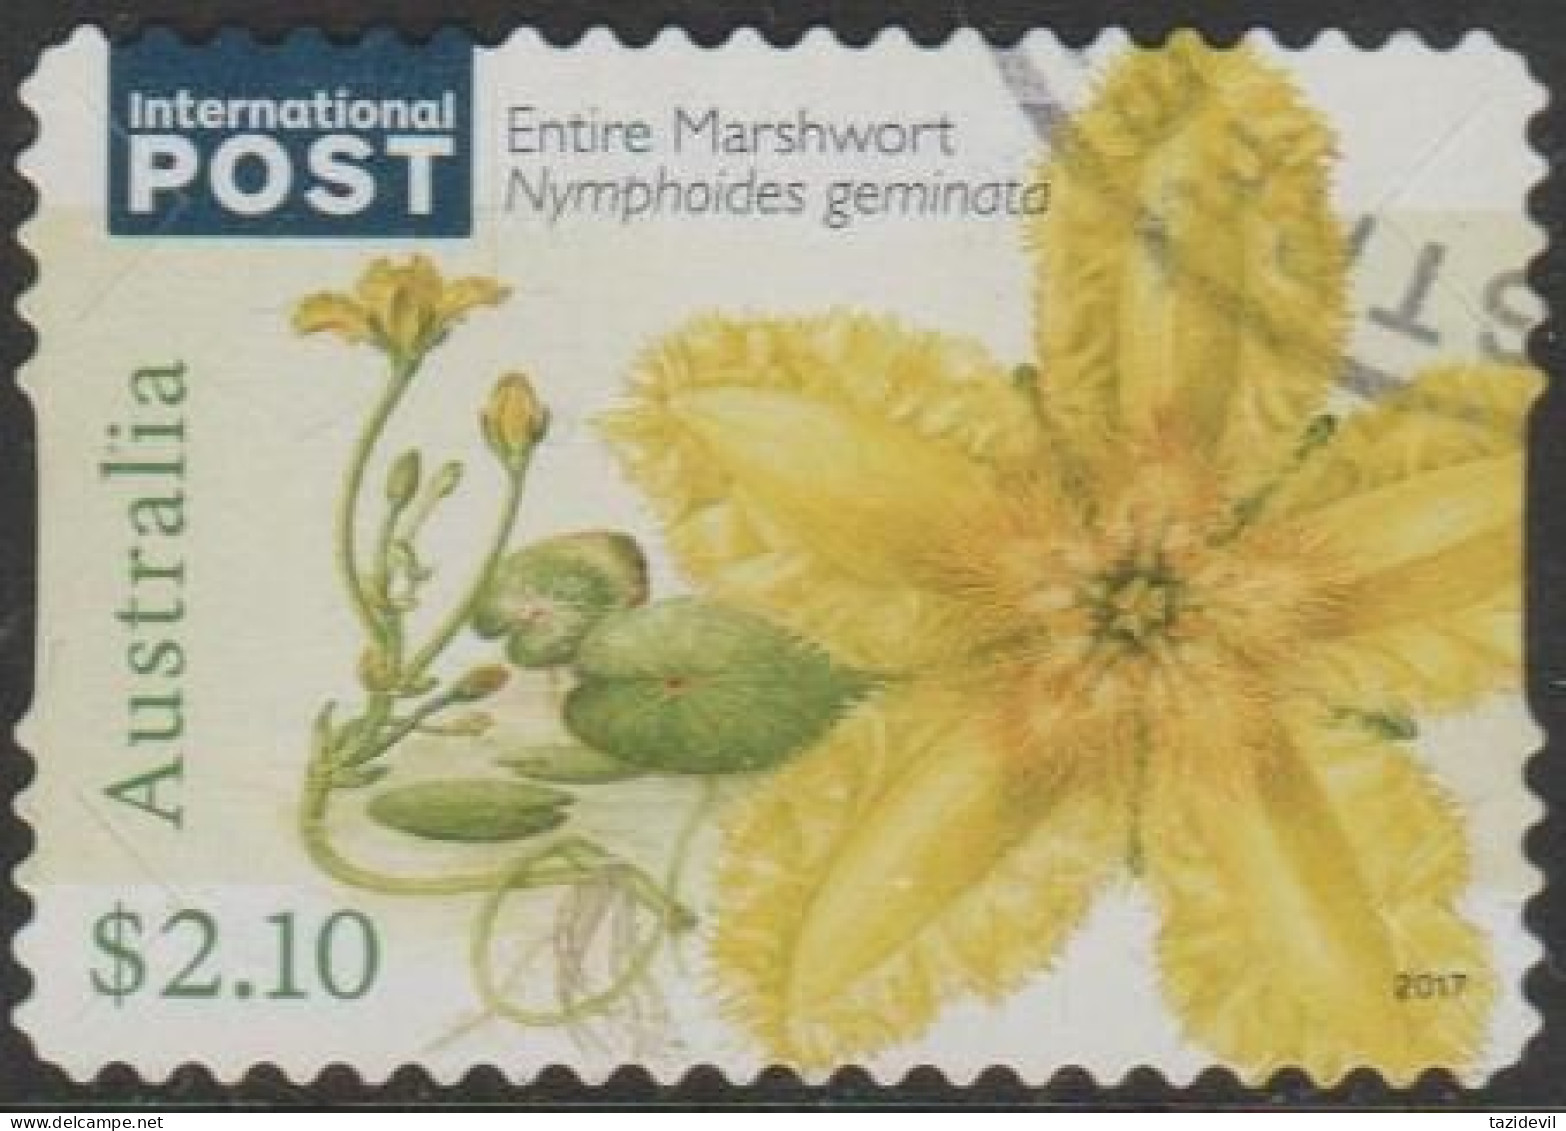 AUSTRALIA - DIE-CUT - USED - 2017 $2.10 Water Plants, International - Entire Marshwort - Used Stamps